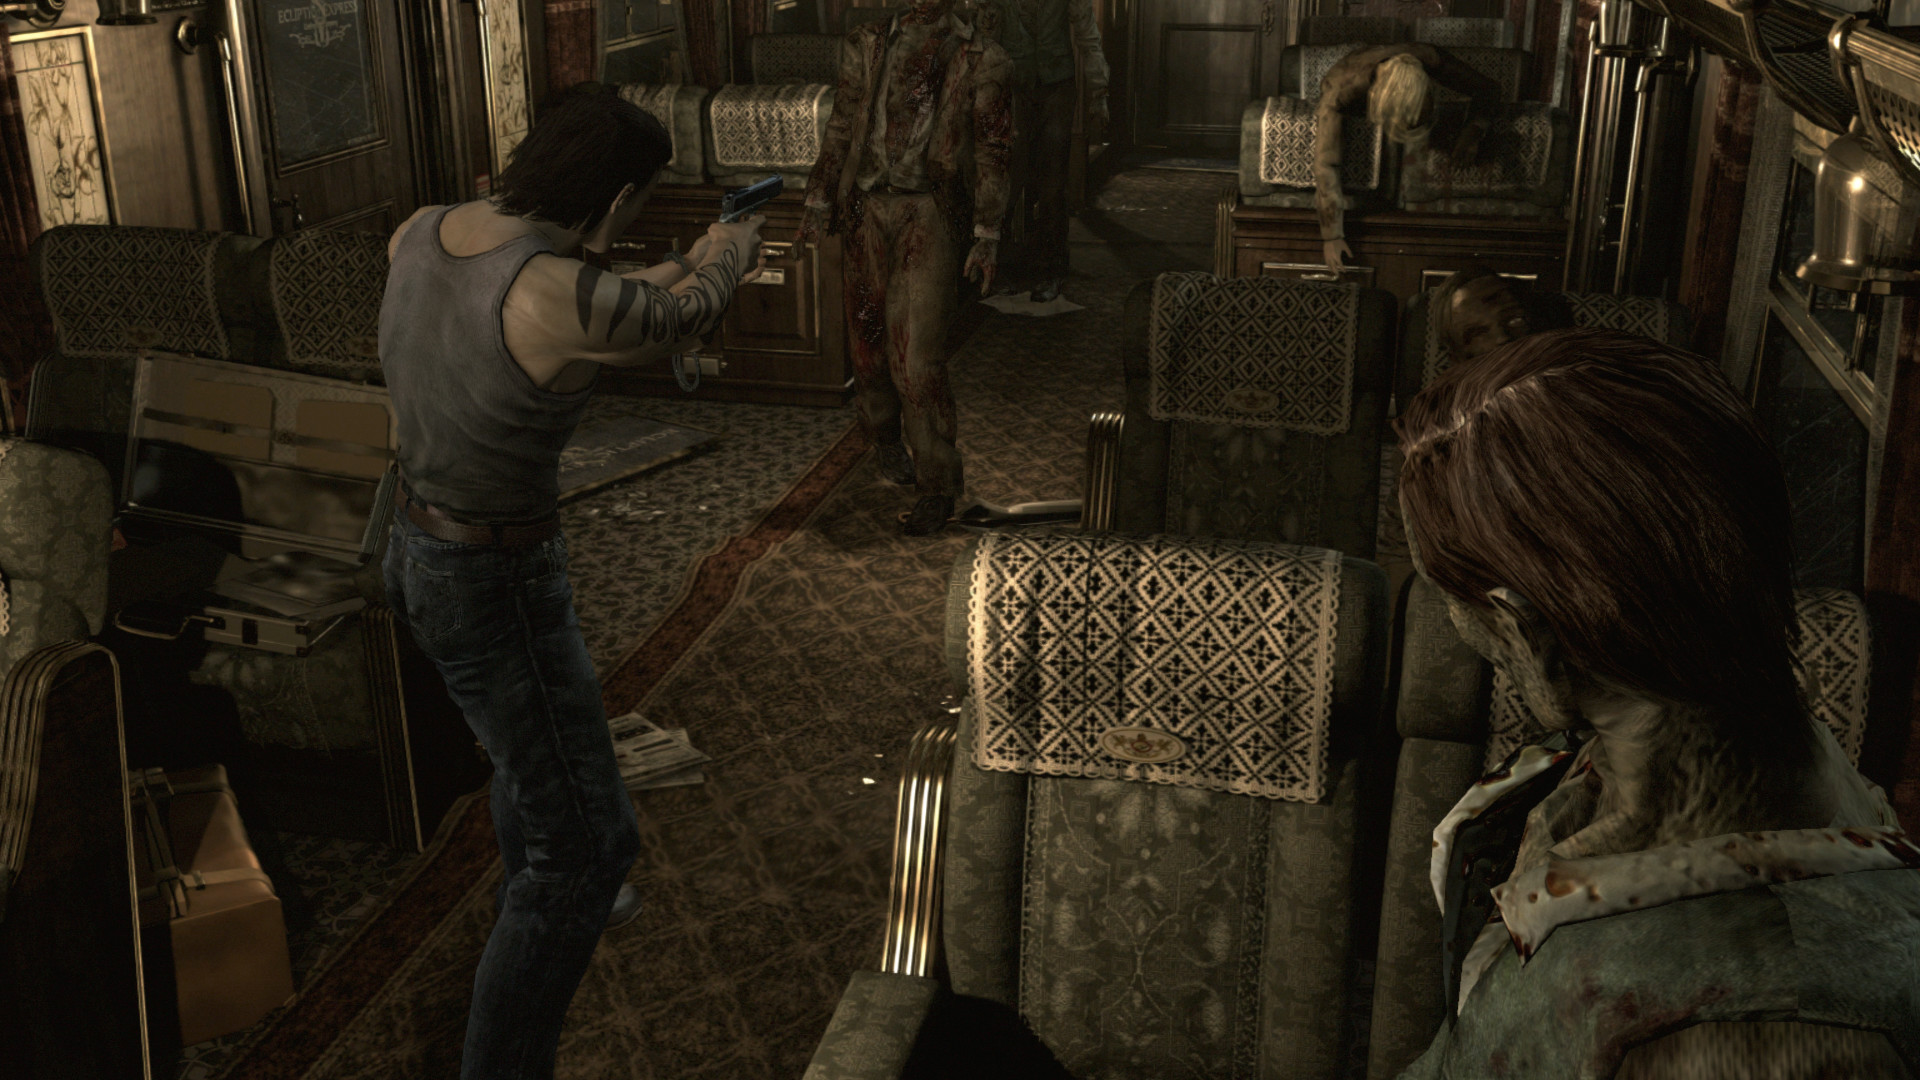 Save 75% on Resident Evil 4 (2005) on Steam